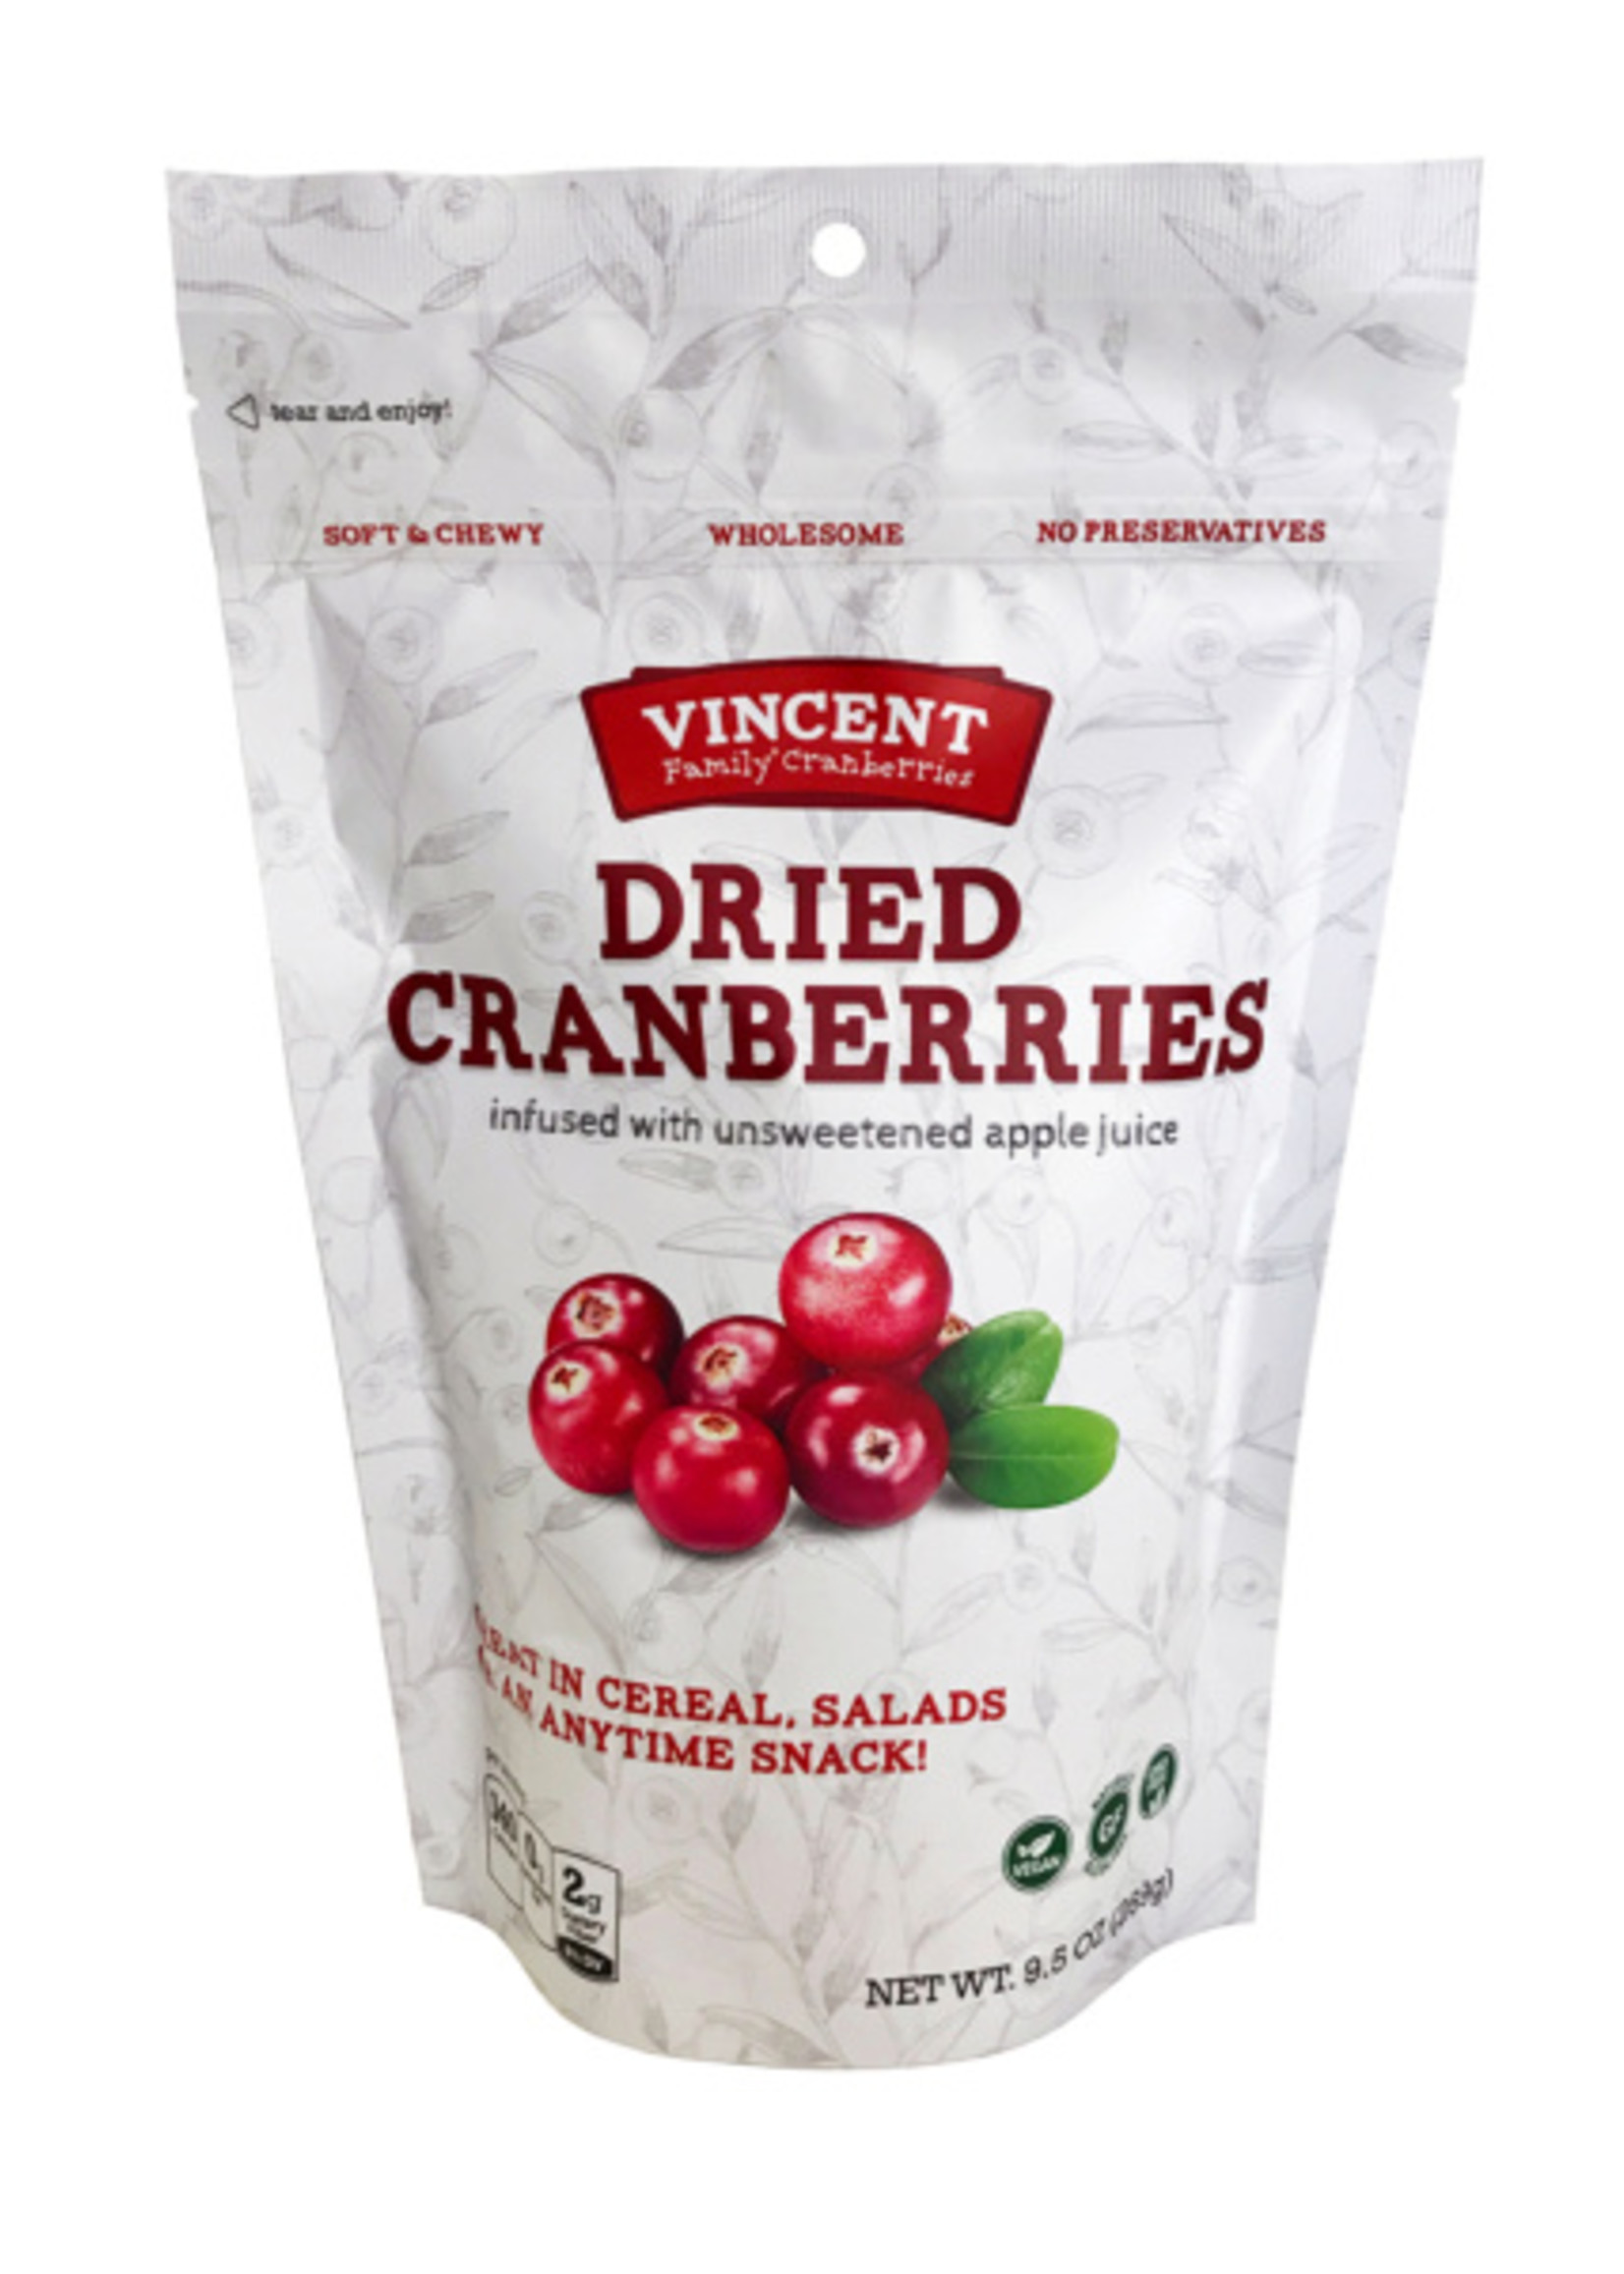 Vincent Family Cranberries Dried Cranberries